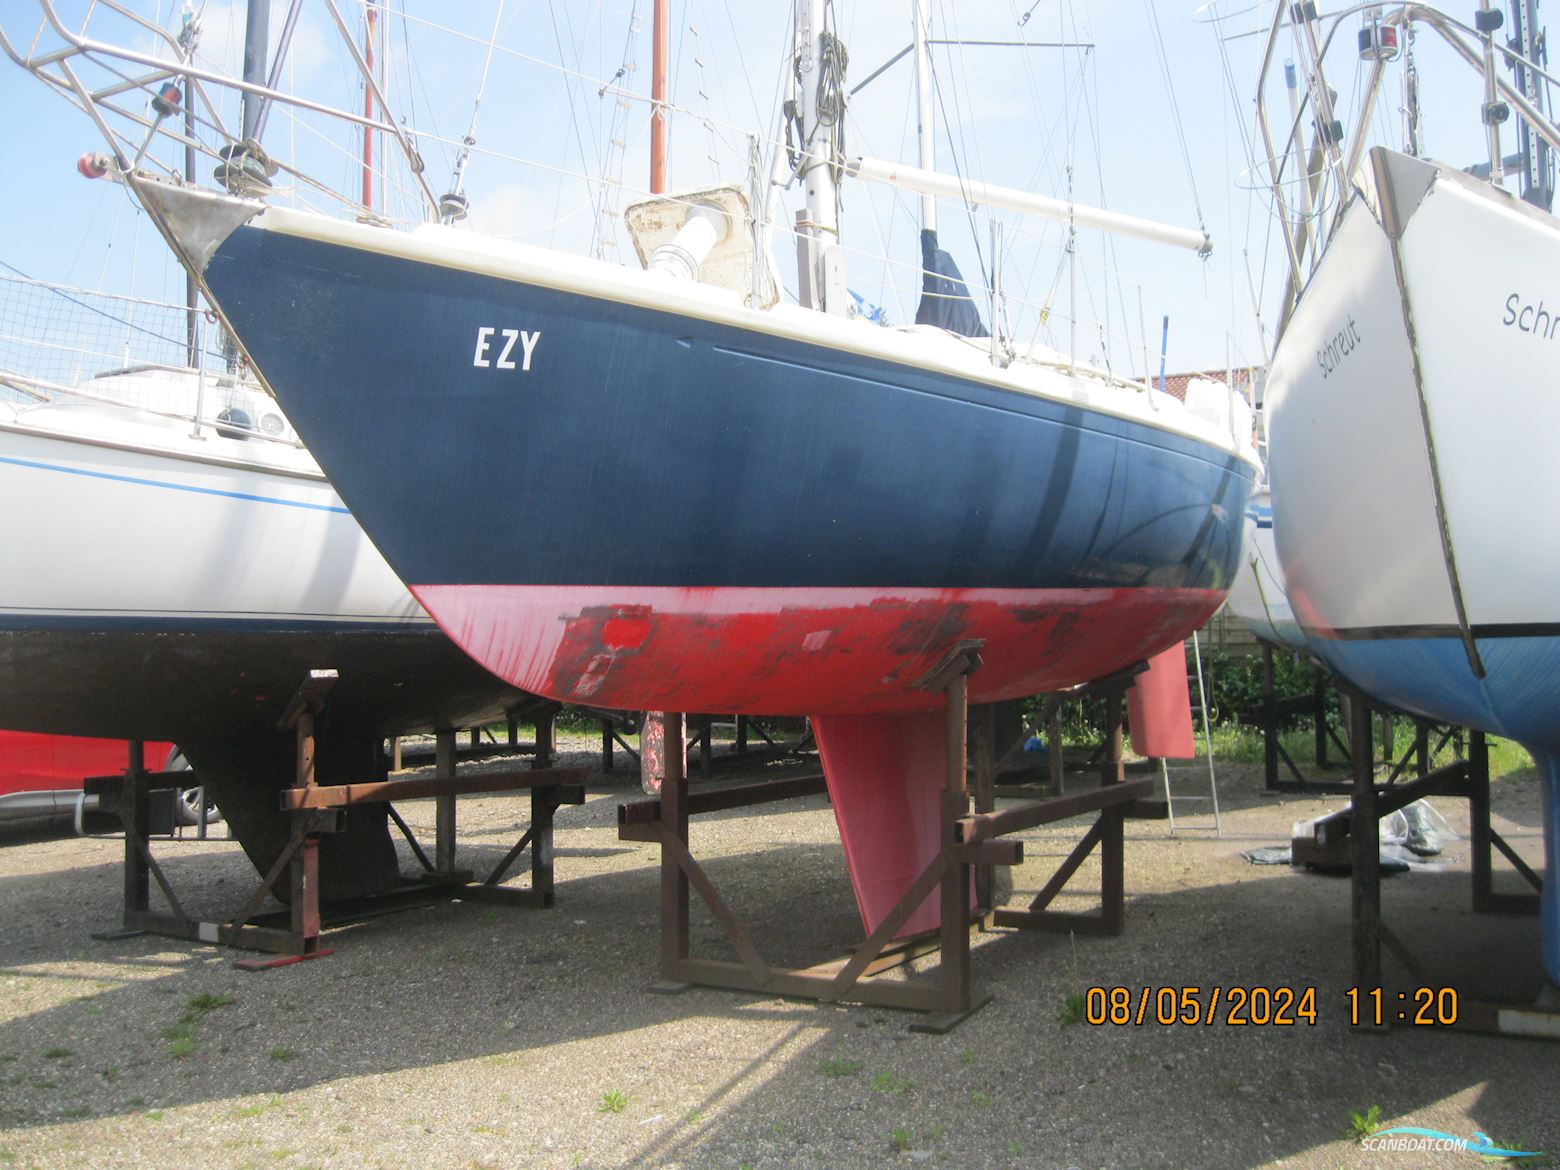 Koopmans 31 Nova (Project) Sailing boat 2000, The Netherlands